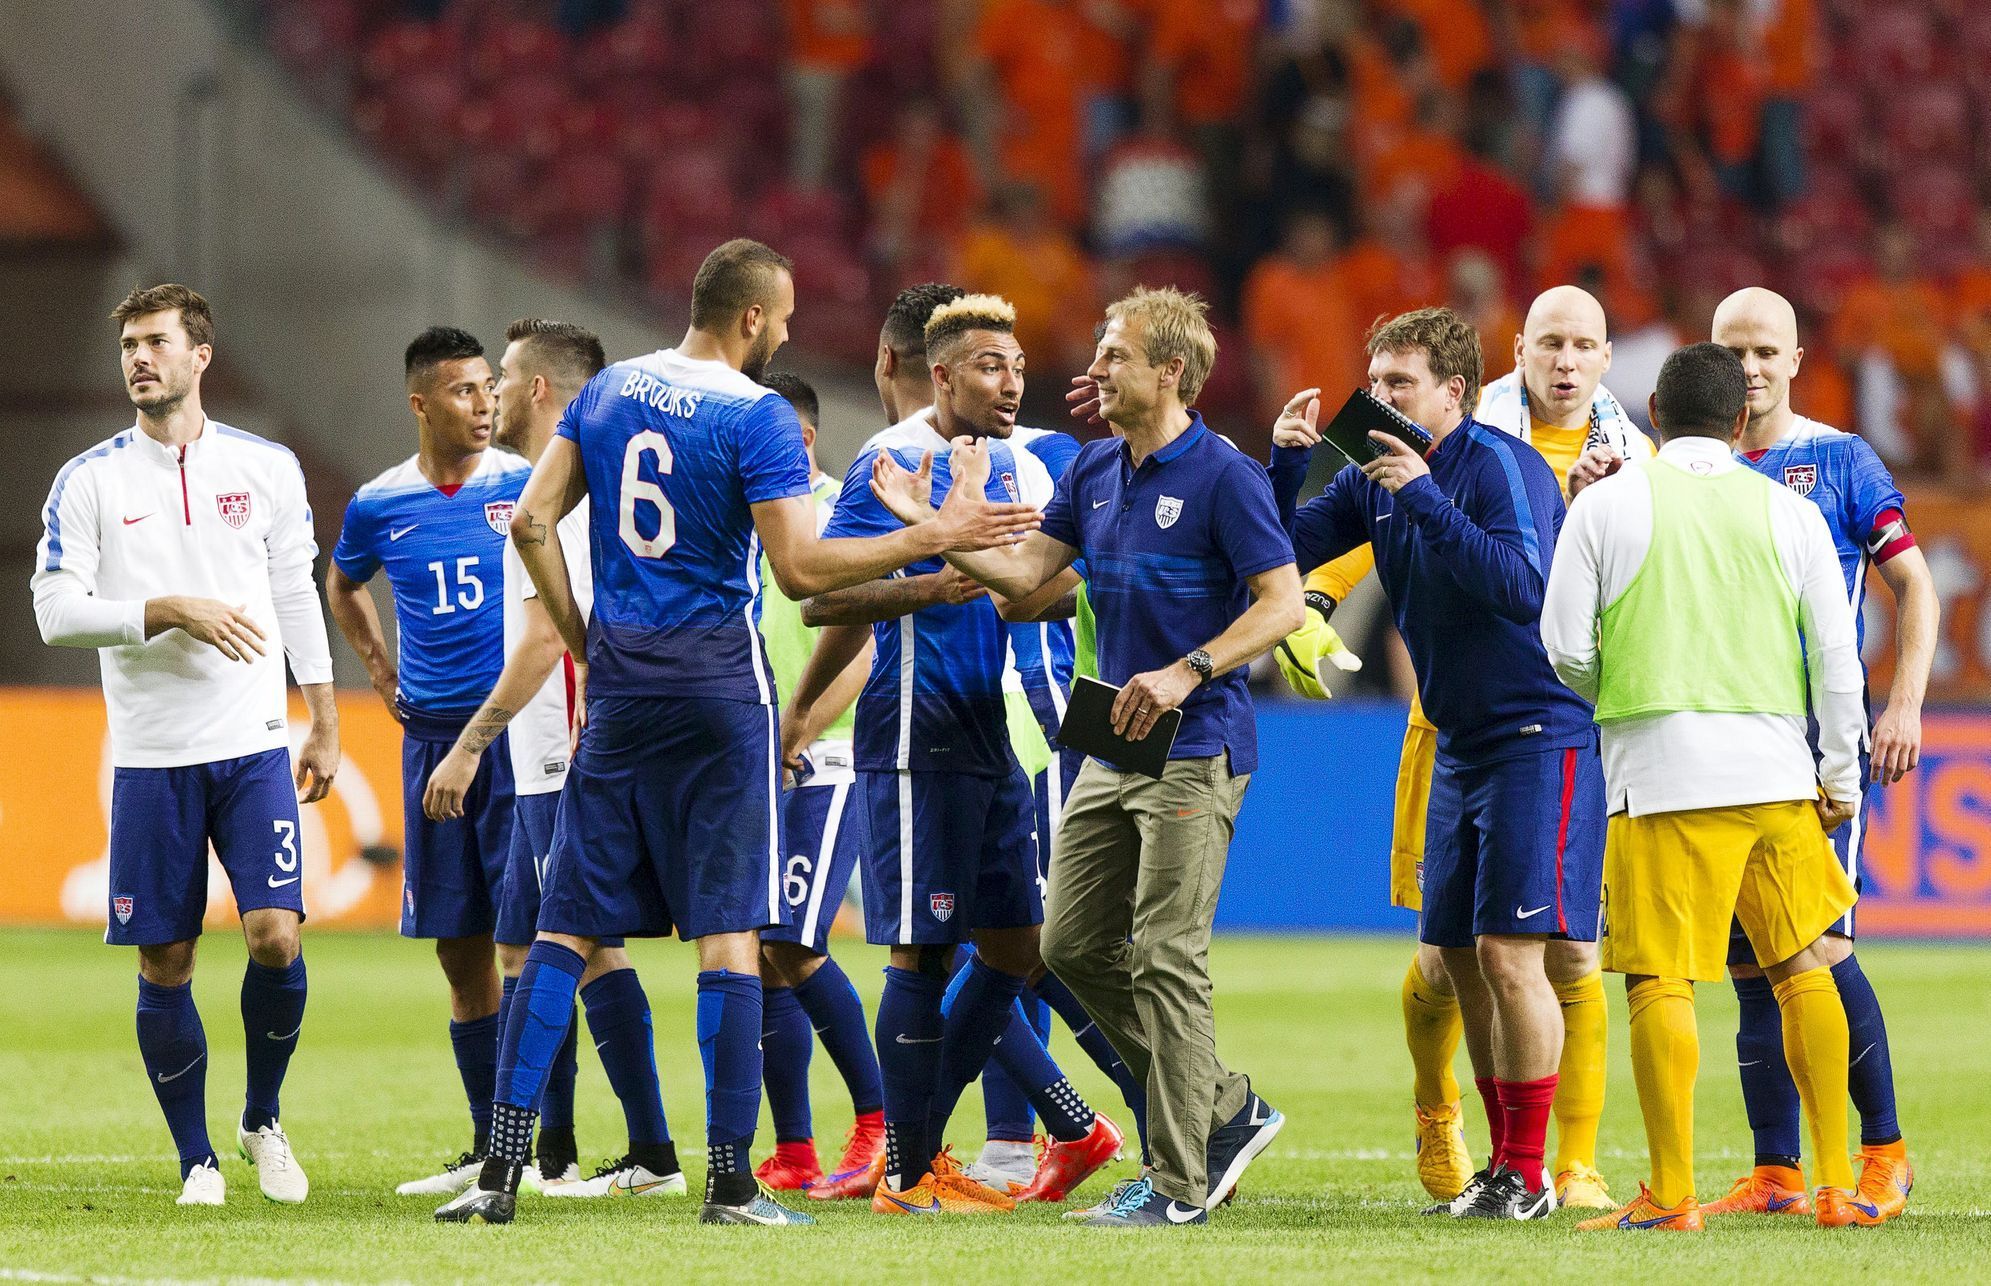 Team U.S. celebrate victory over Netherlands with coach Jurgen Klinsmann after friendly soccer match at Amsterdam Arena